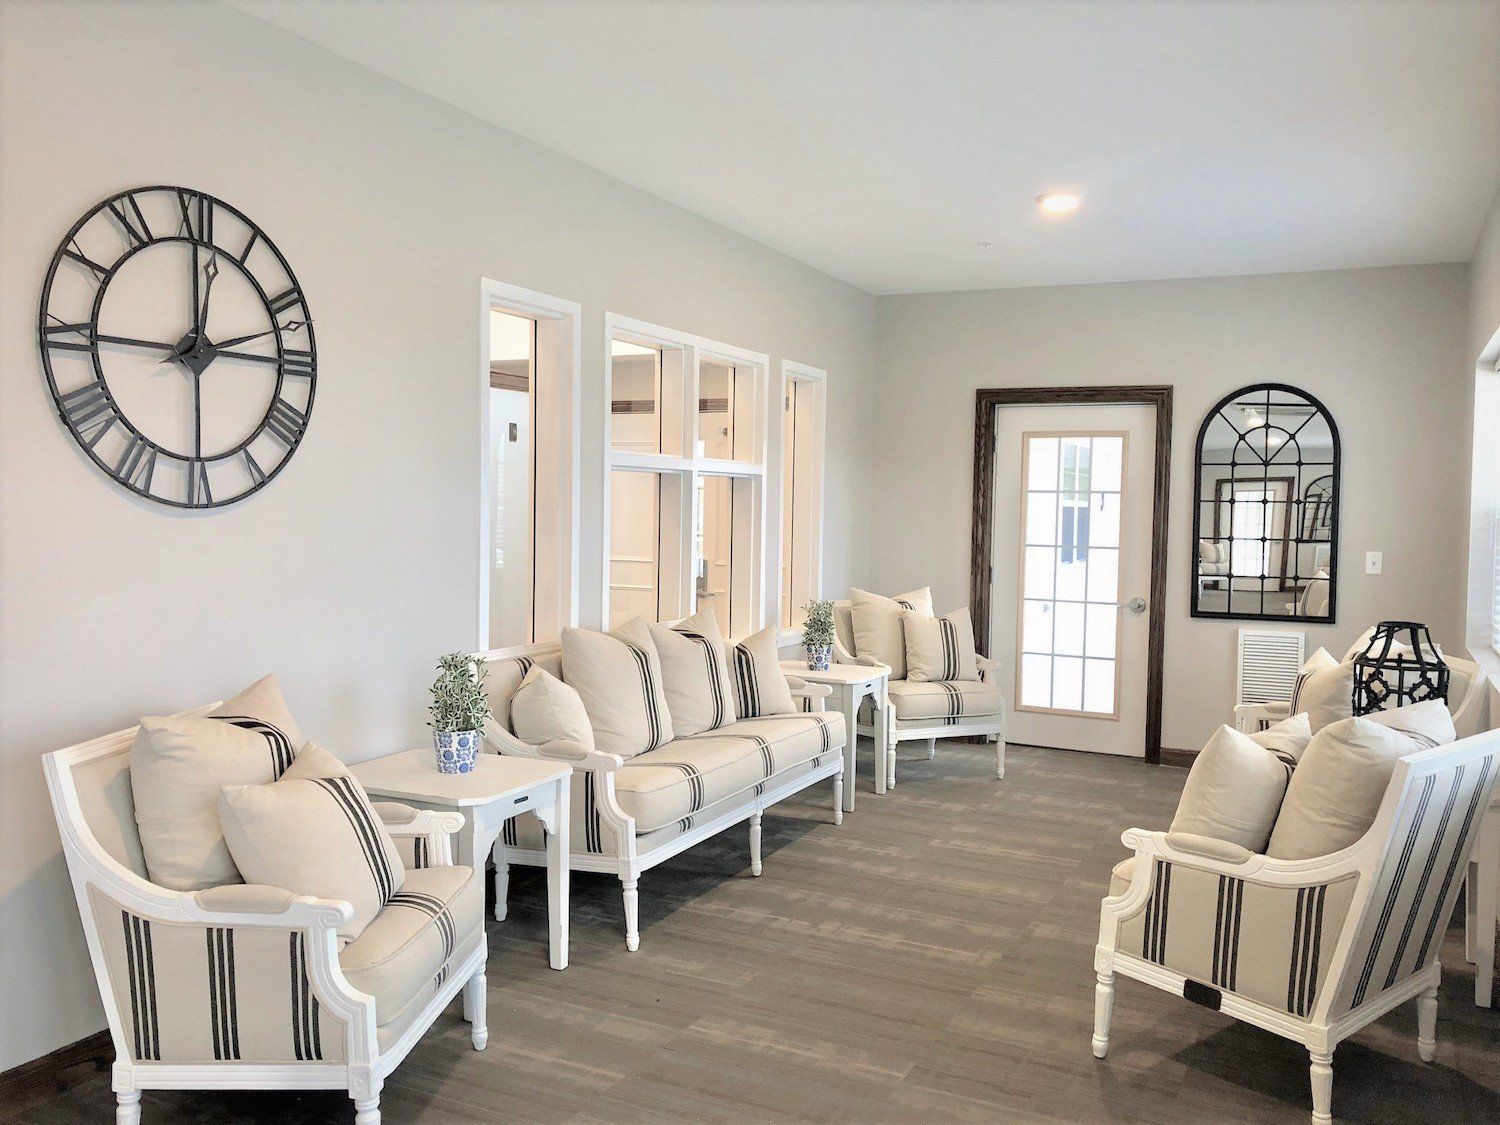 Senior living community Cedarhurst of Naperville featuring cozy living room with modern decor.